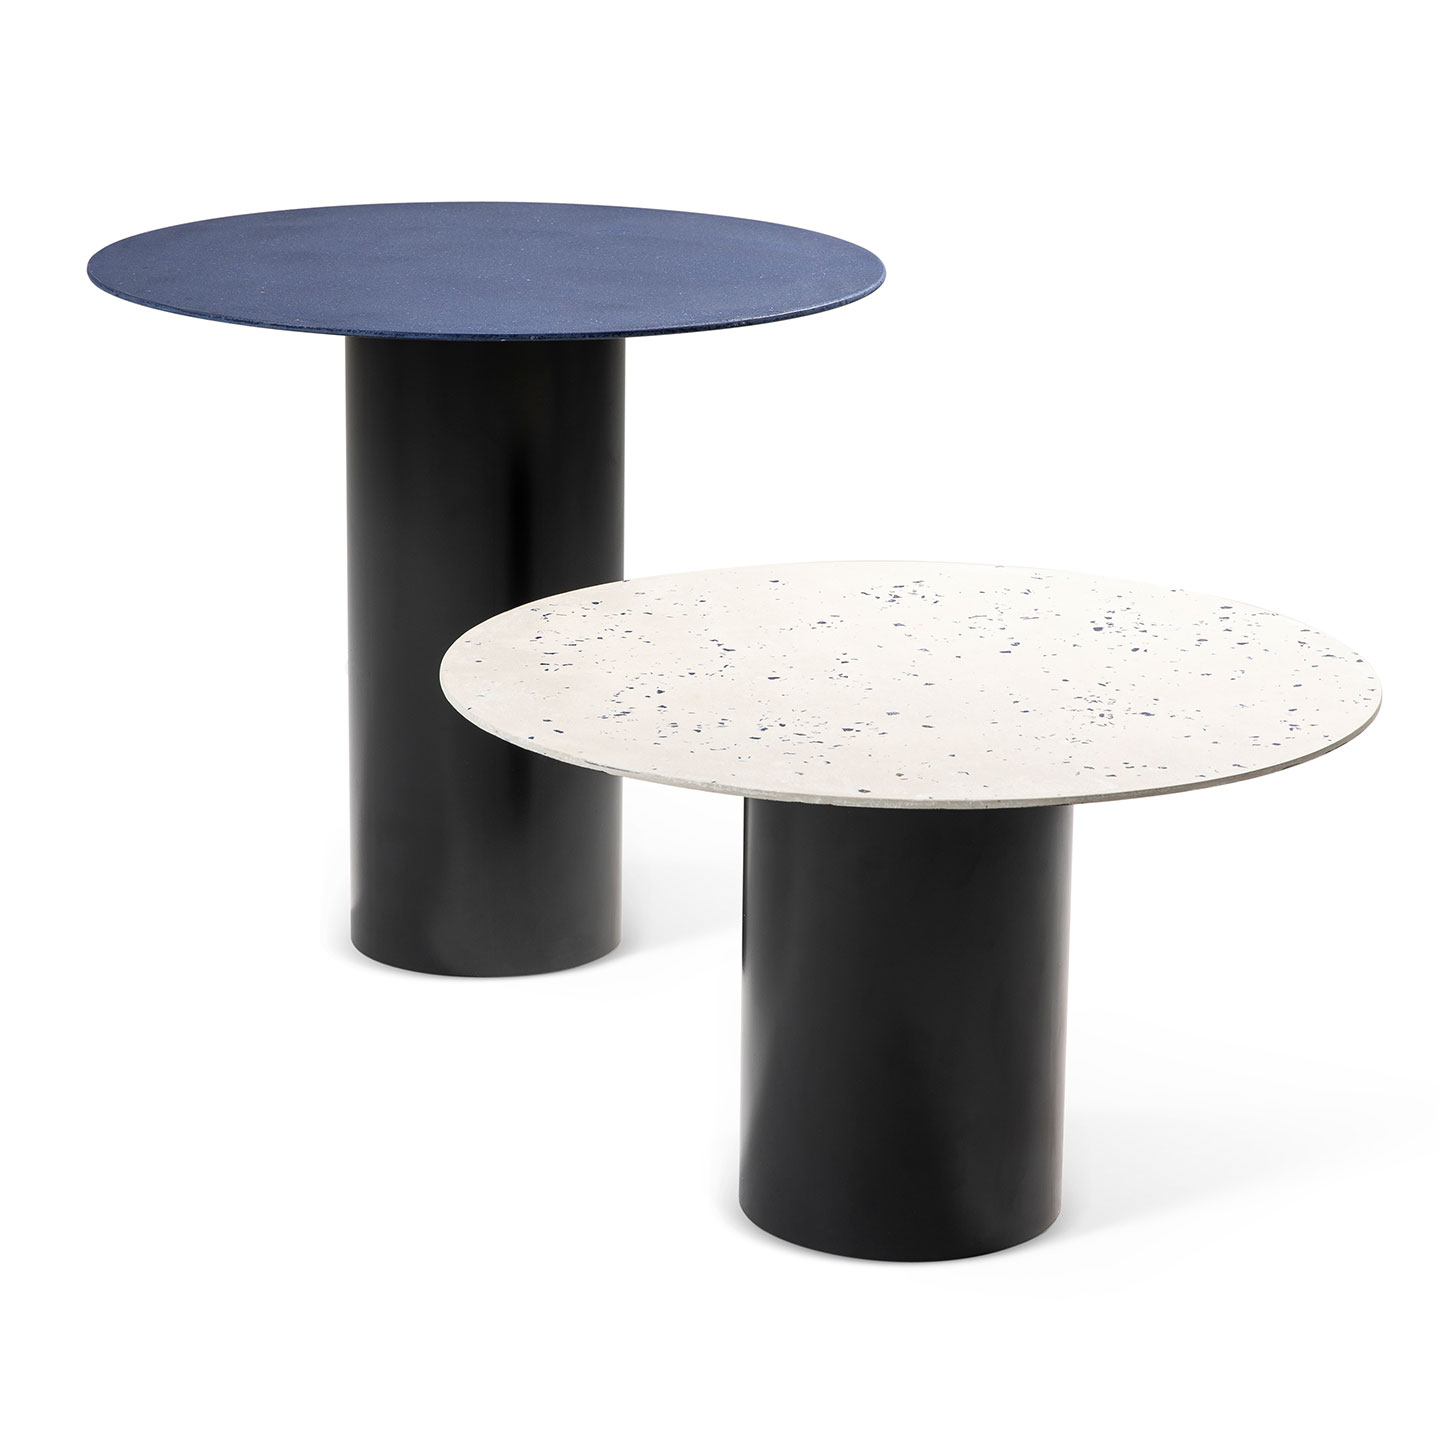 Mush边桌配有坚固的圆柱形底座和纤细的圆形桌面，以模仿蘑菇形状，巧妙玩转比例，可在任何环境中呈现出生动趣意的对比效果。